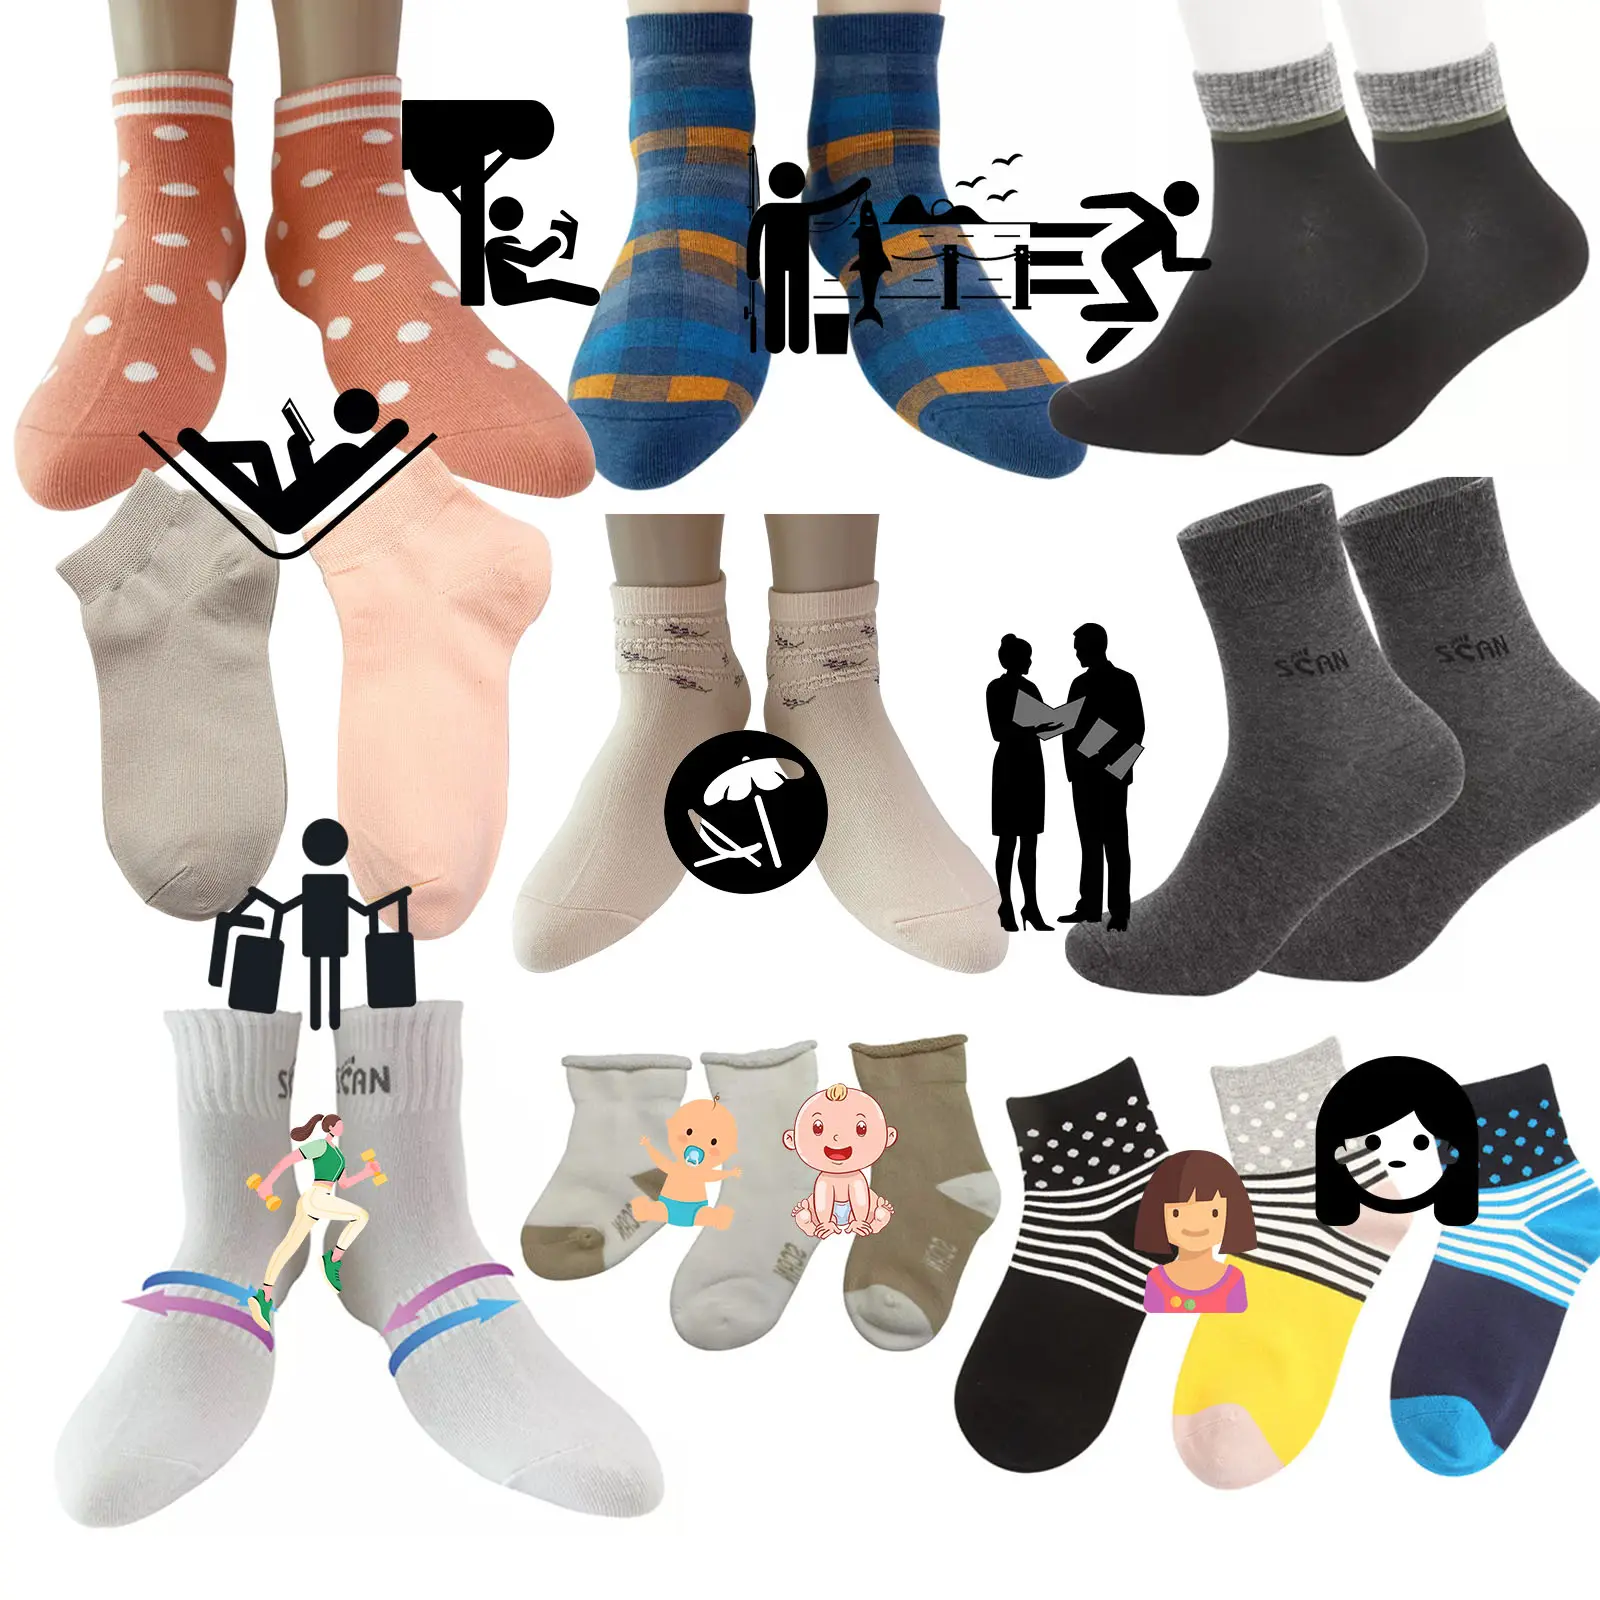 2 Months Free Return & Refund Top Quality Unisex Cotton Socks Seamless Toe Best Socks